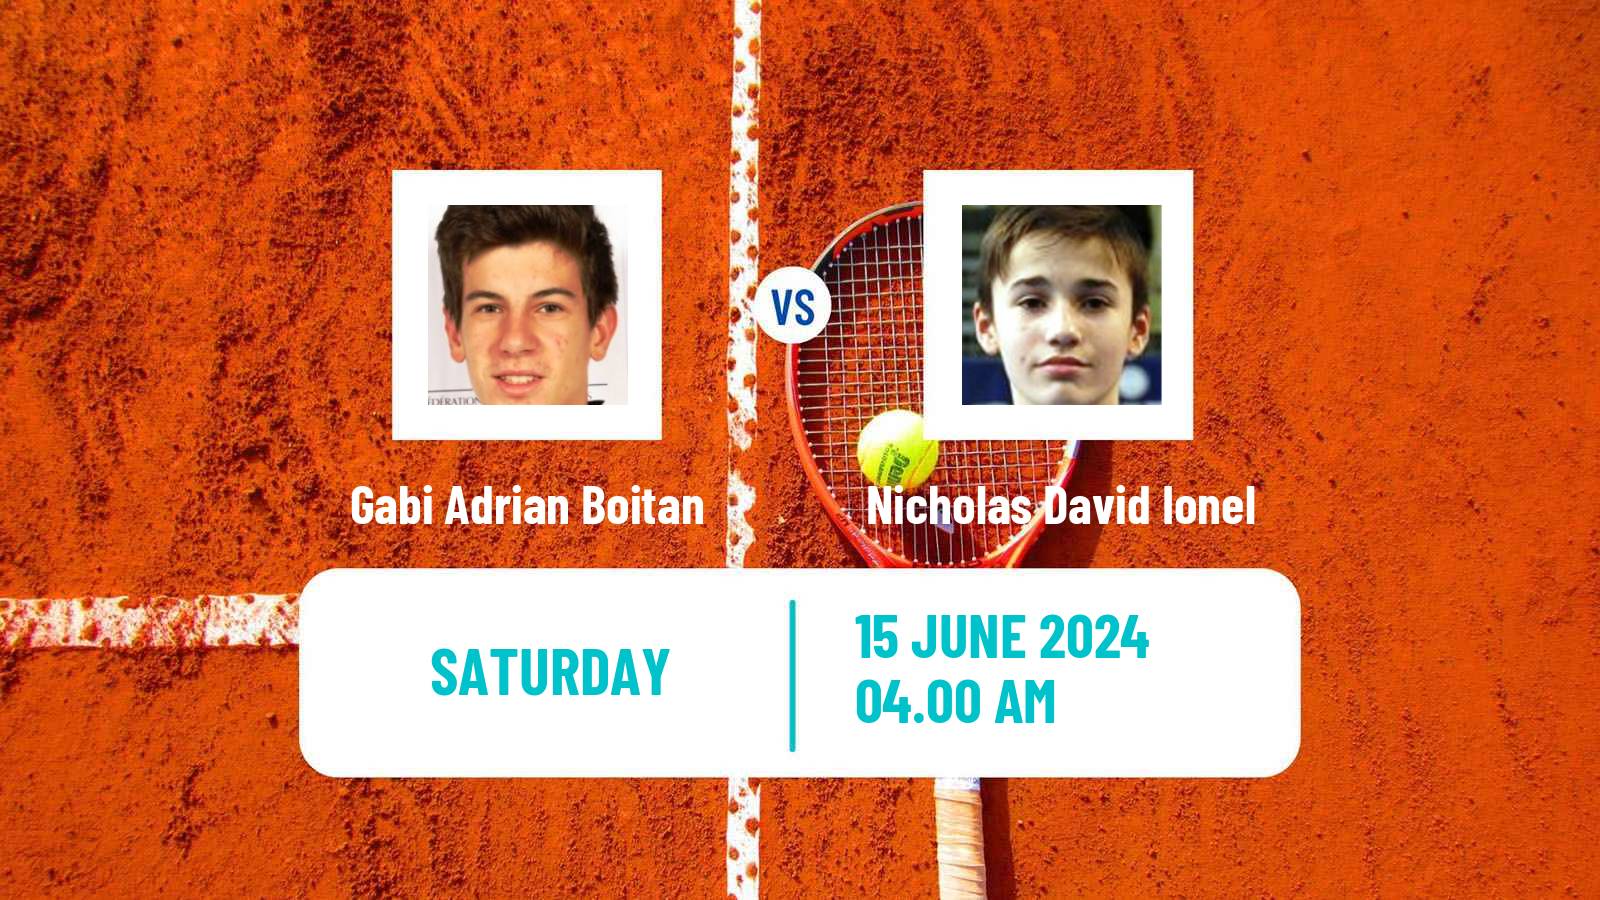 Tennis ITF M15 Oradea Men Gabi Adrian Boitan - Nicholas David Ionel